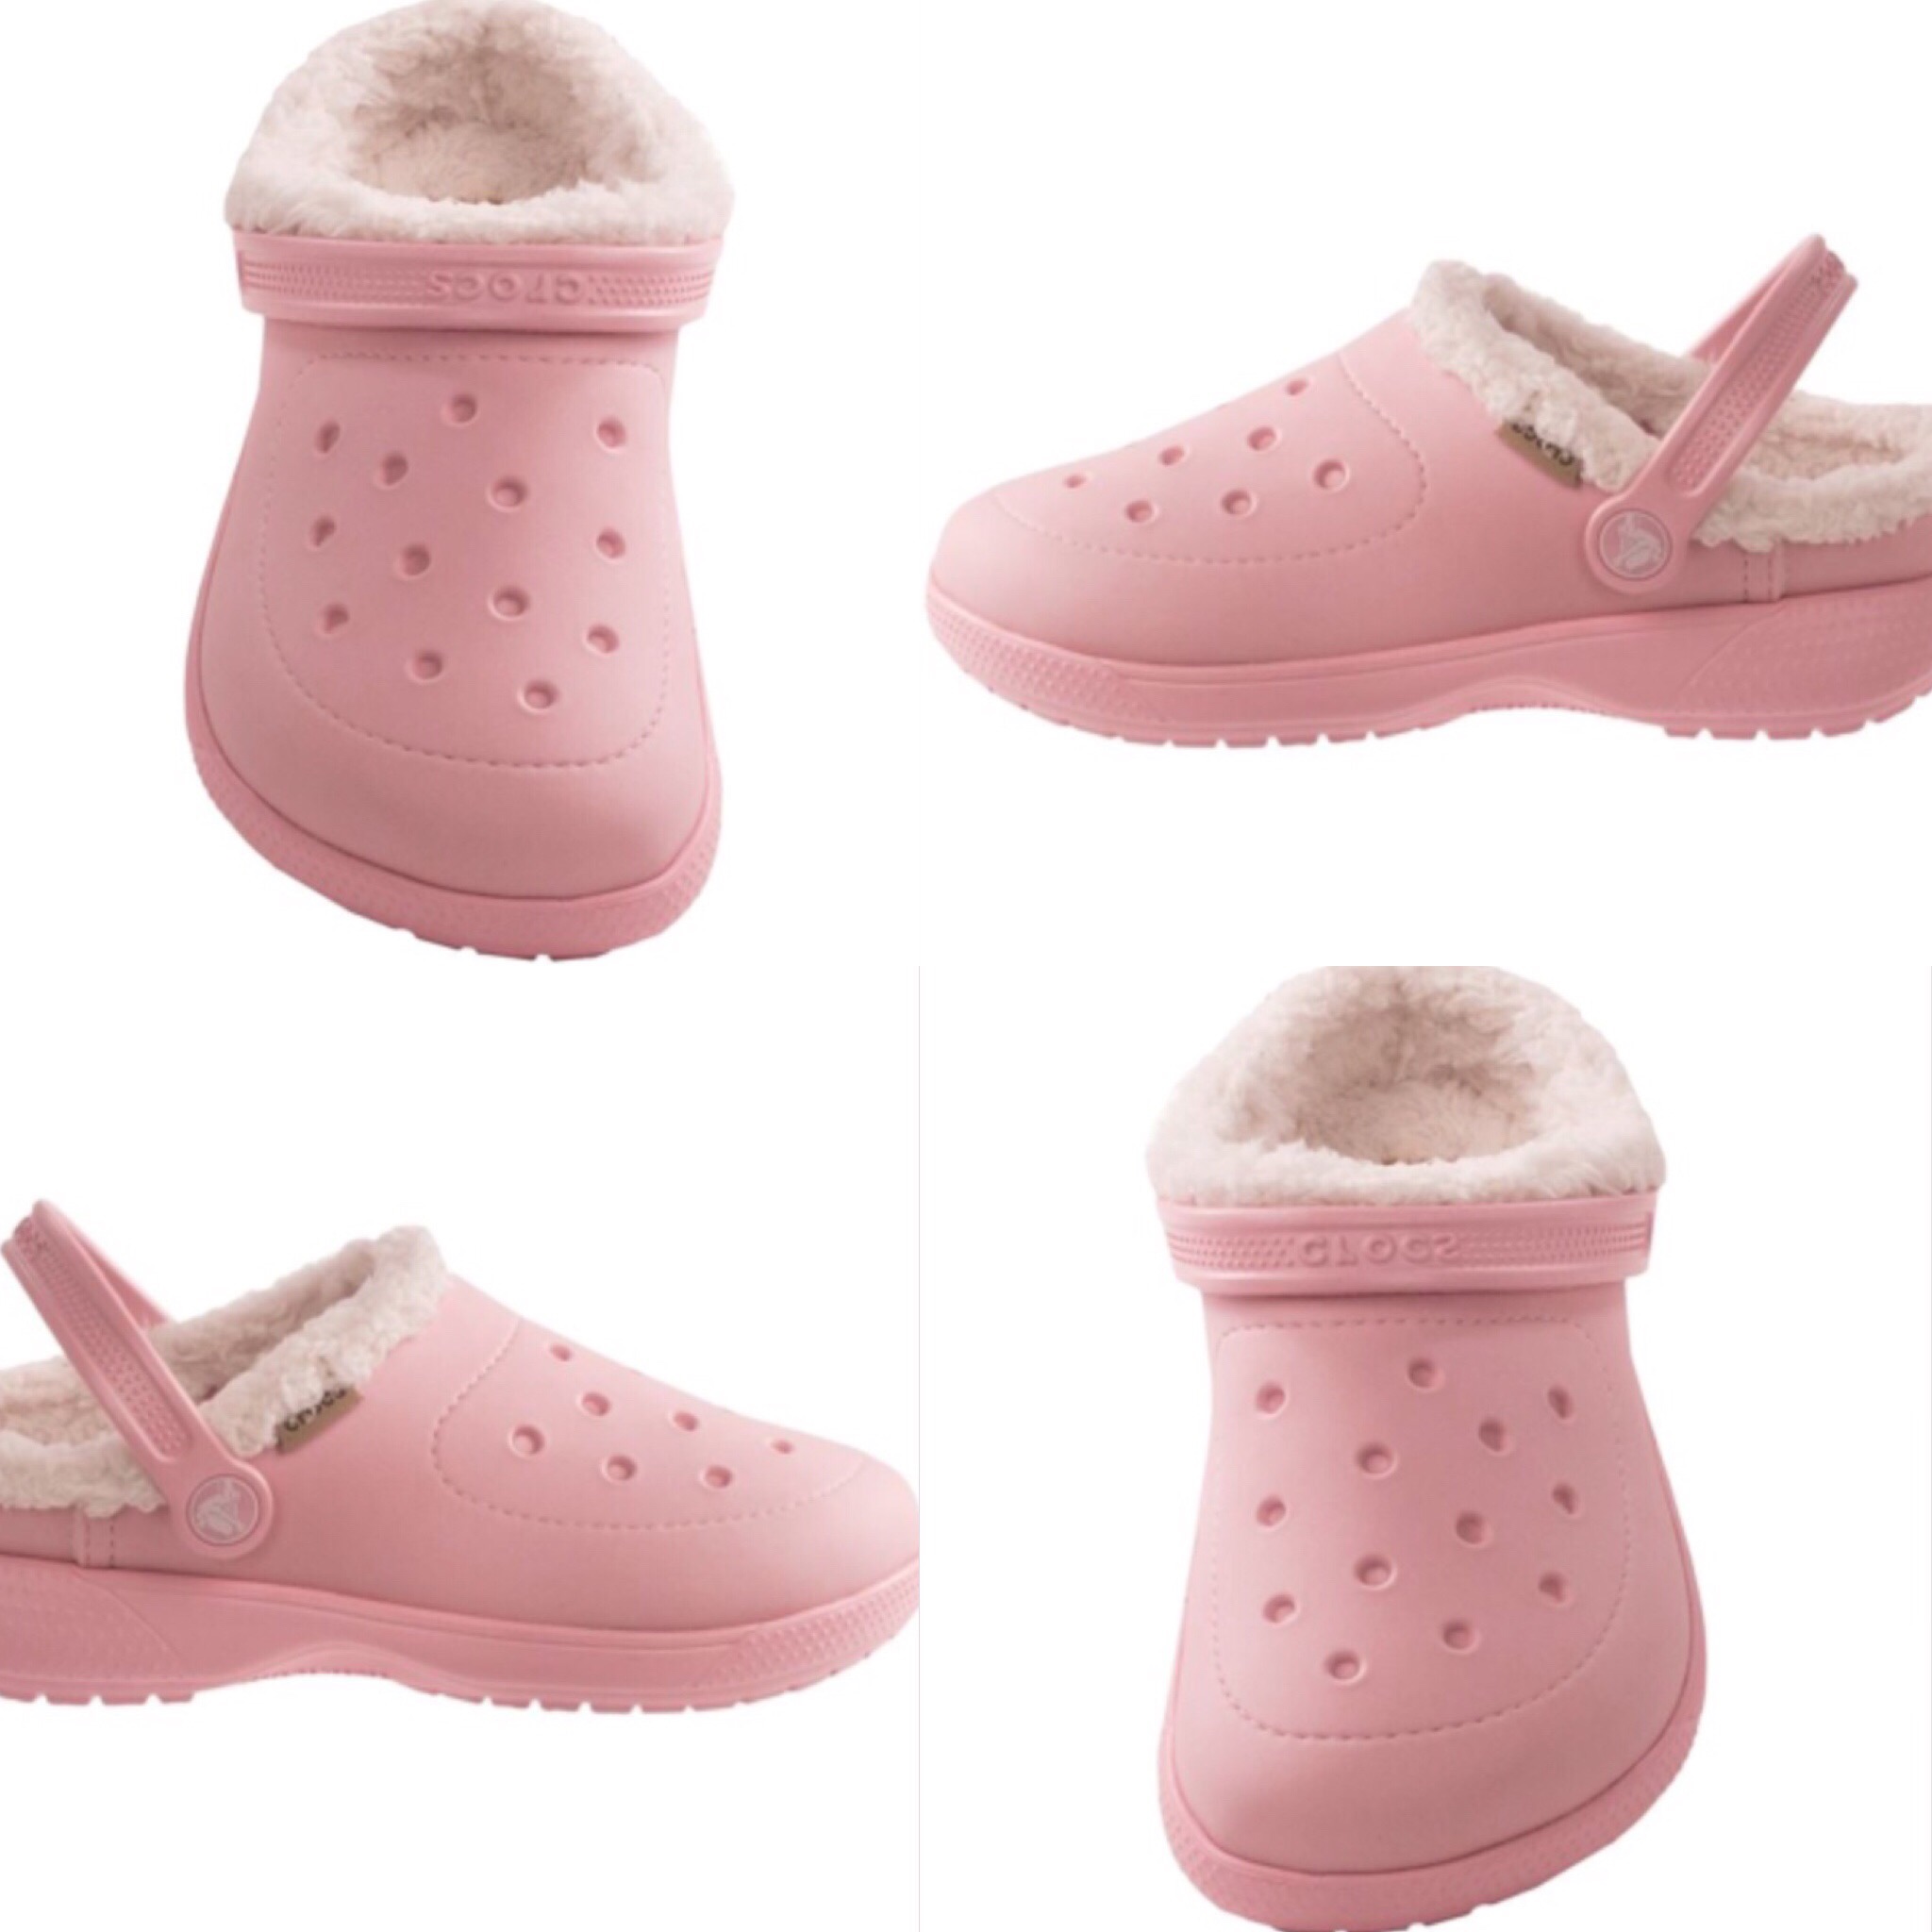 furry pink crocs